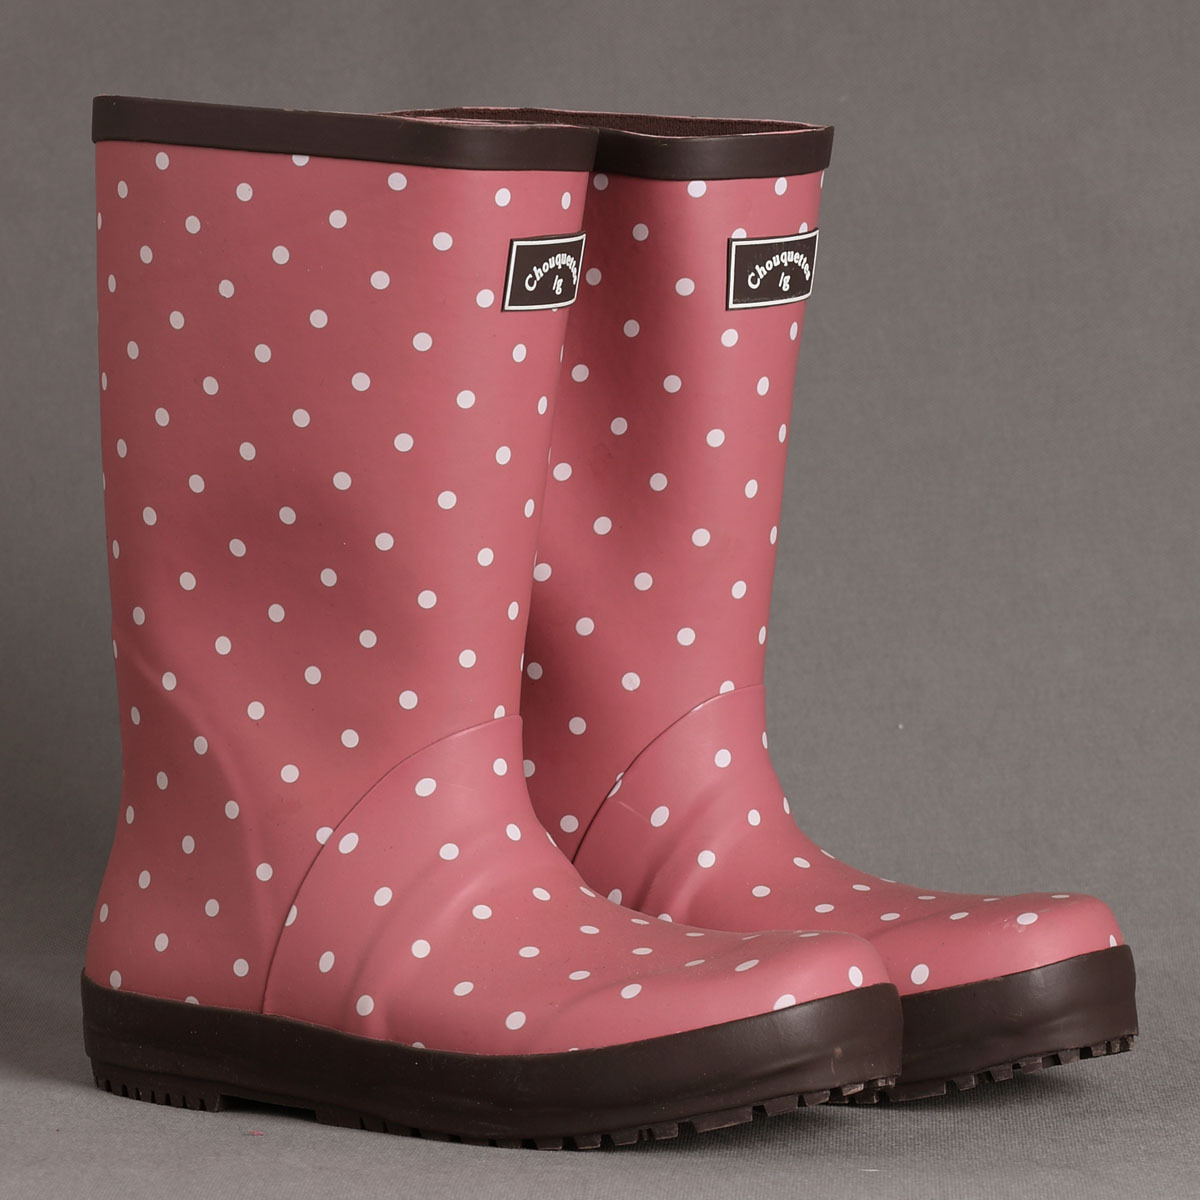 【F7155】包邮特价矮筒粉色原点/粉绿色可爱时尚雨鞋雨靴